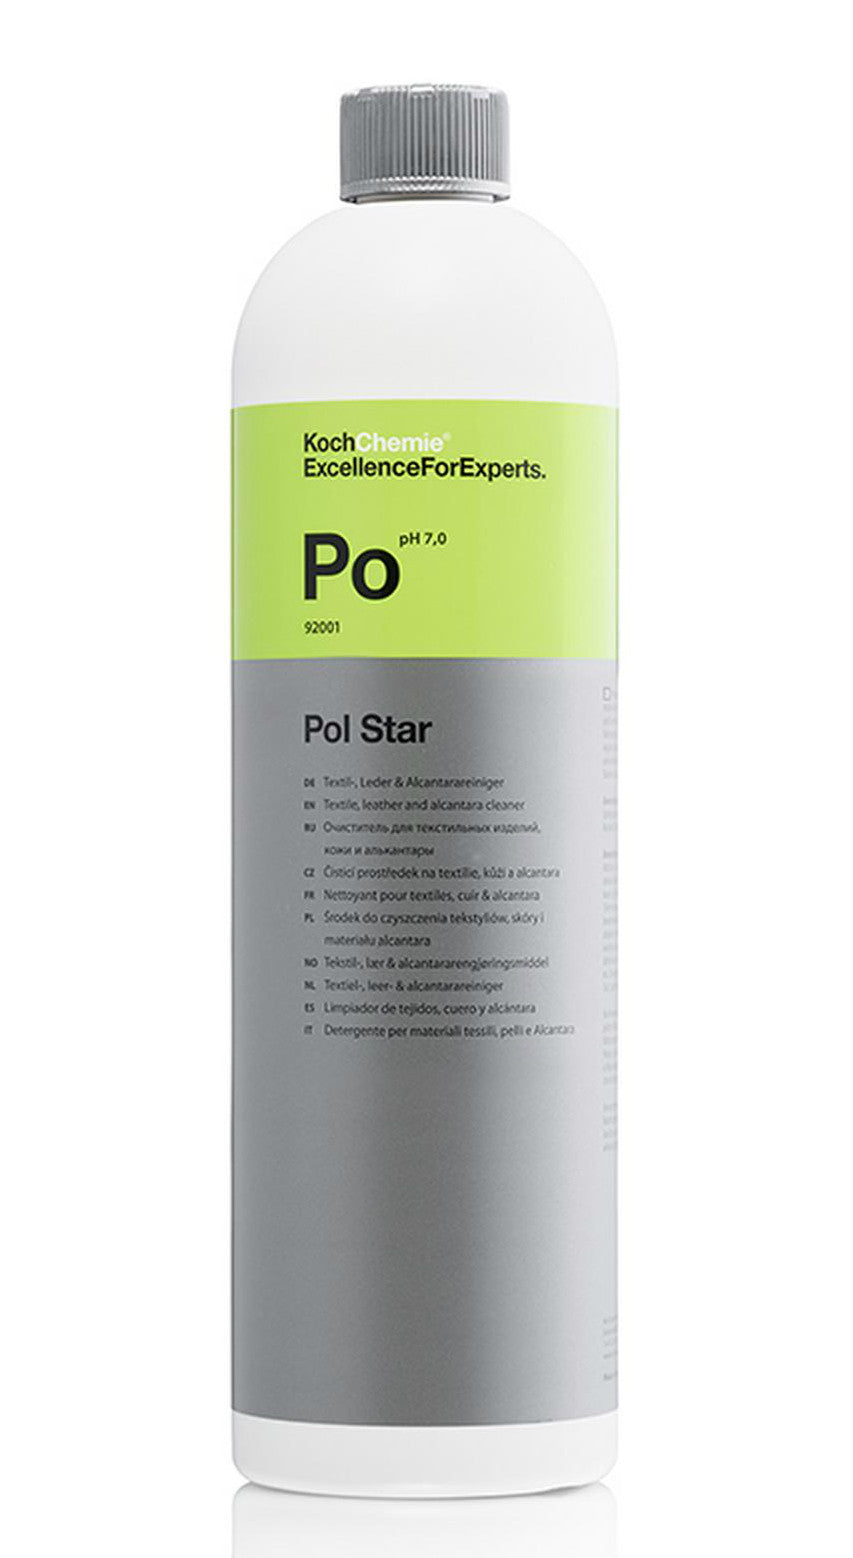 Koch Chemie Pol Star Textile, Leather & Alcantara Cleaner 1 Litre